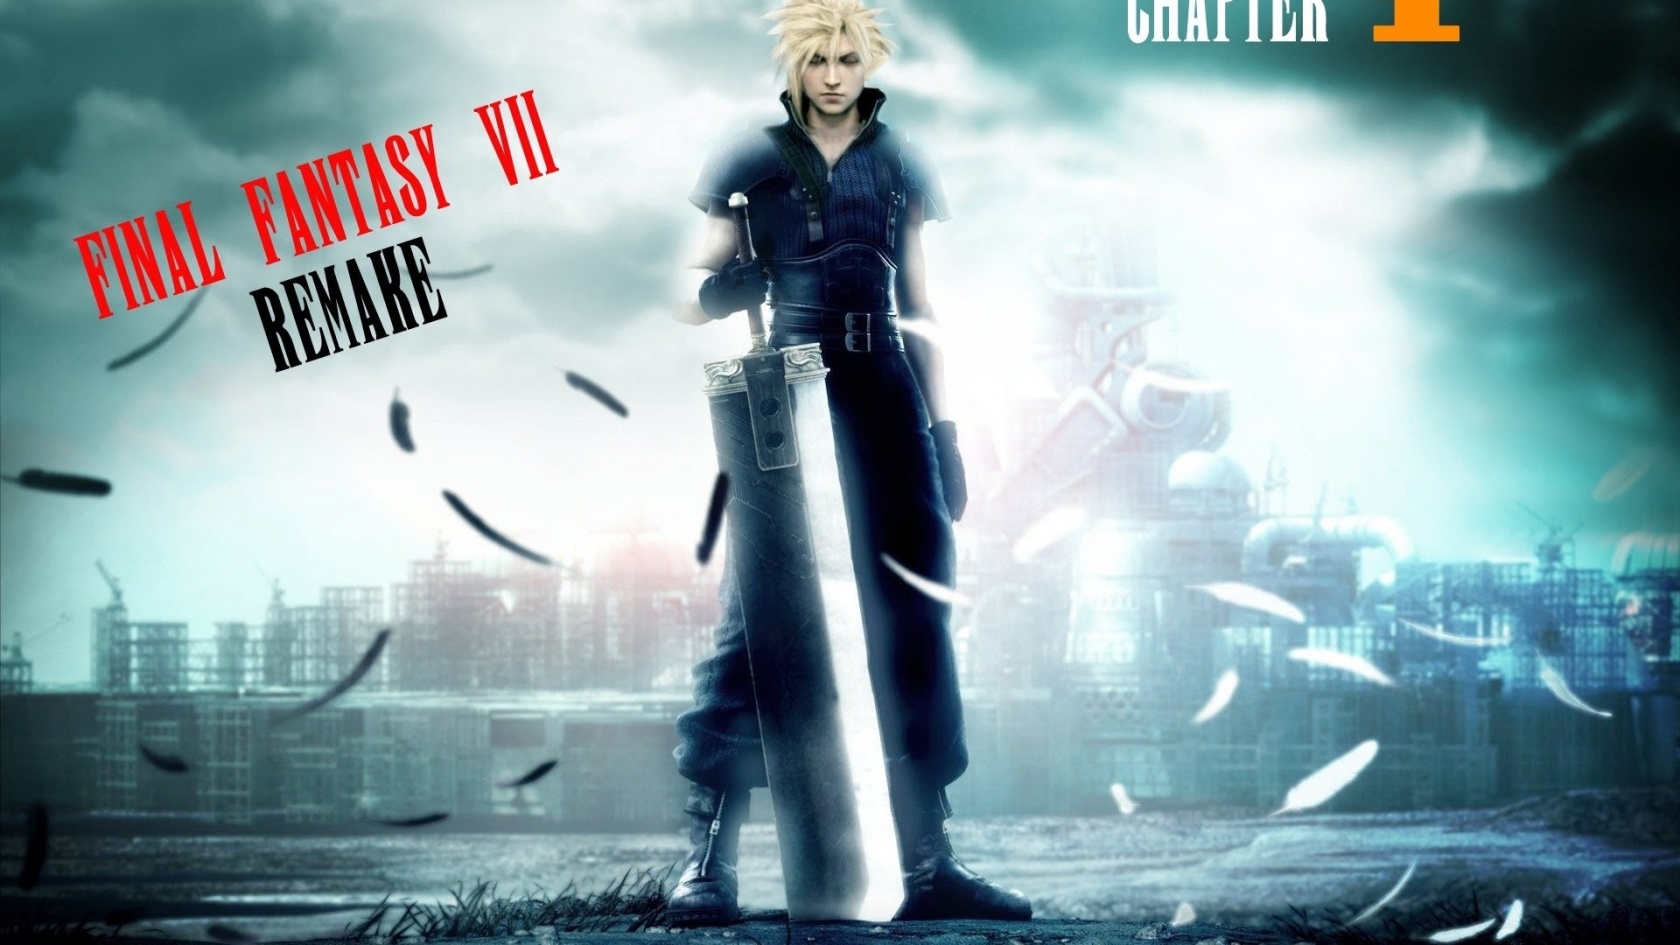 Final Fantasy 7 Remake for 1680 x 945 HDTV resolution